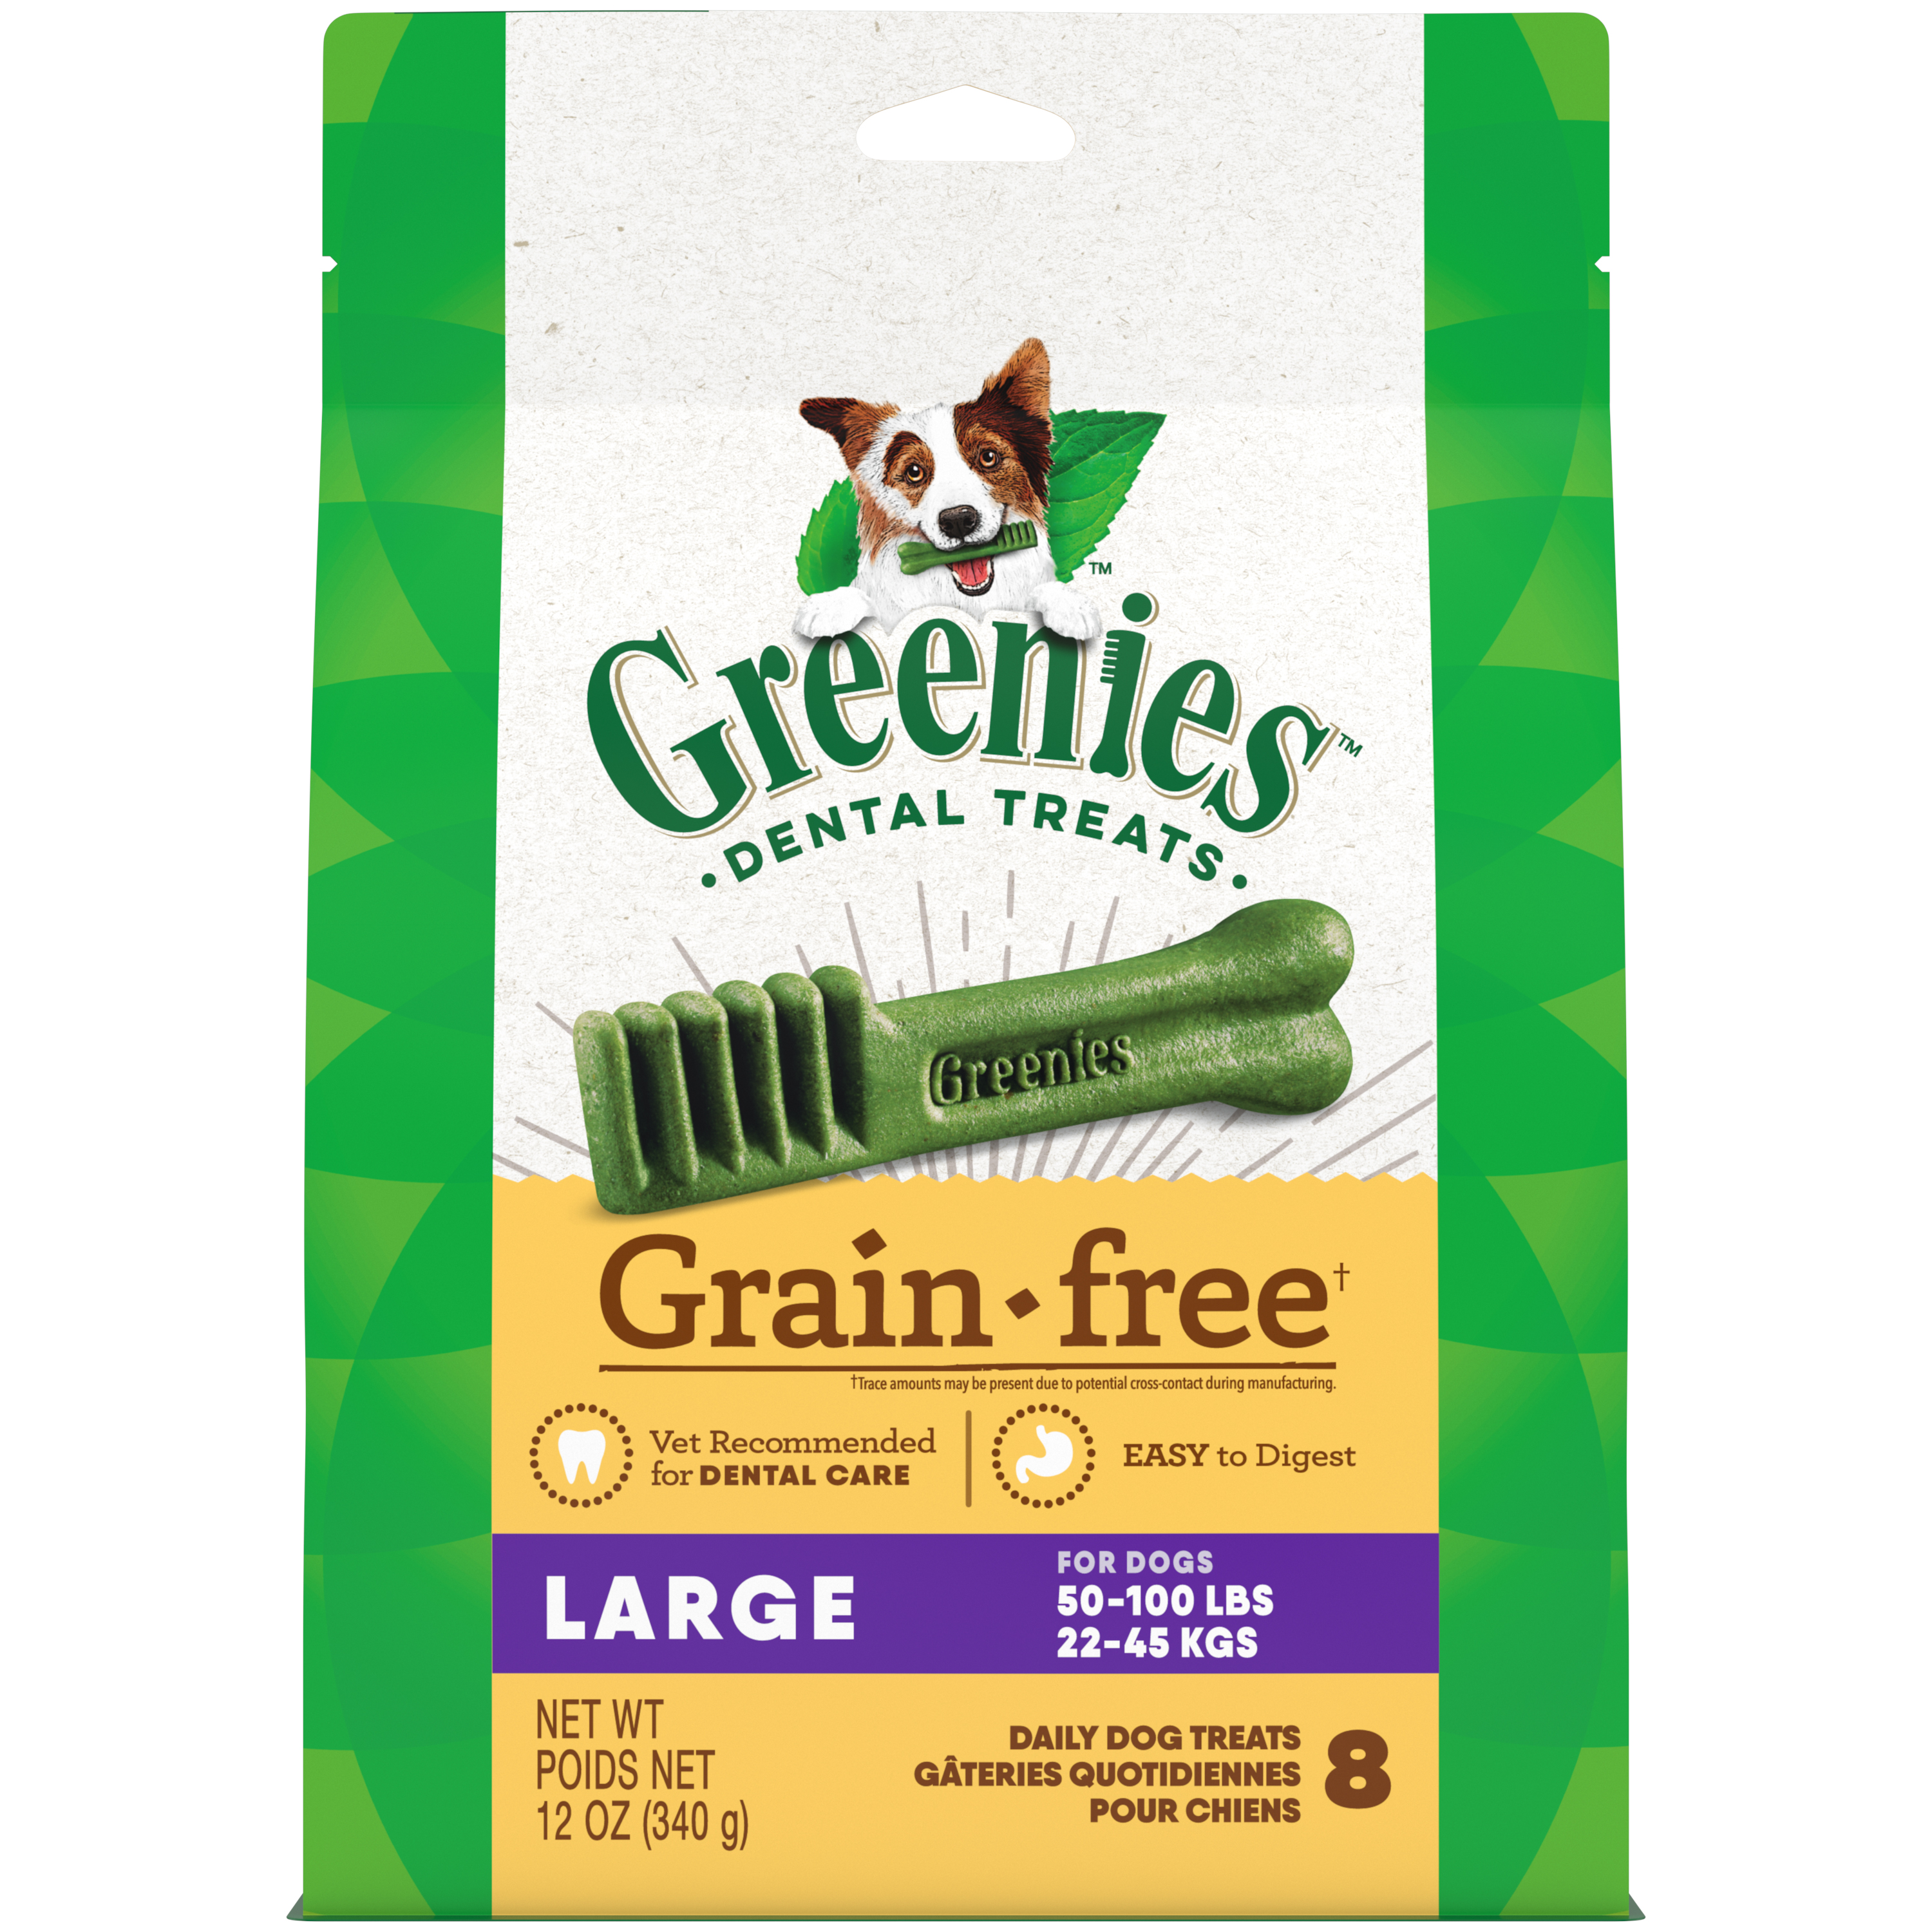 12 oz. Greenies Grain Free Large Treat Pack - Health/First Aid